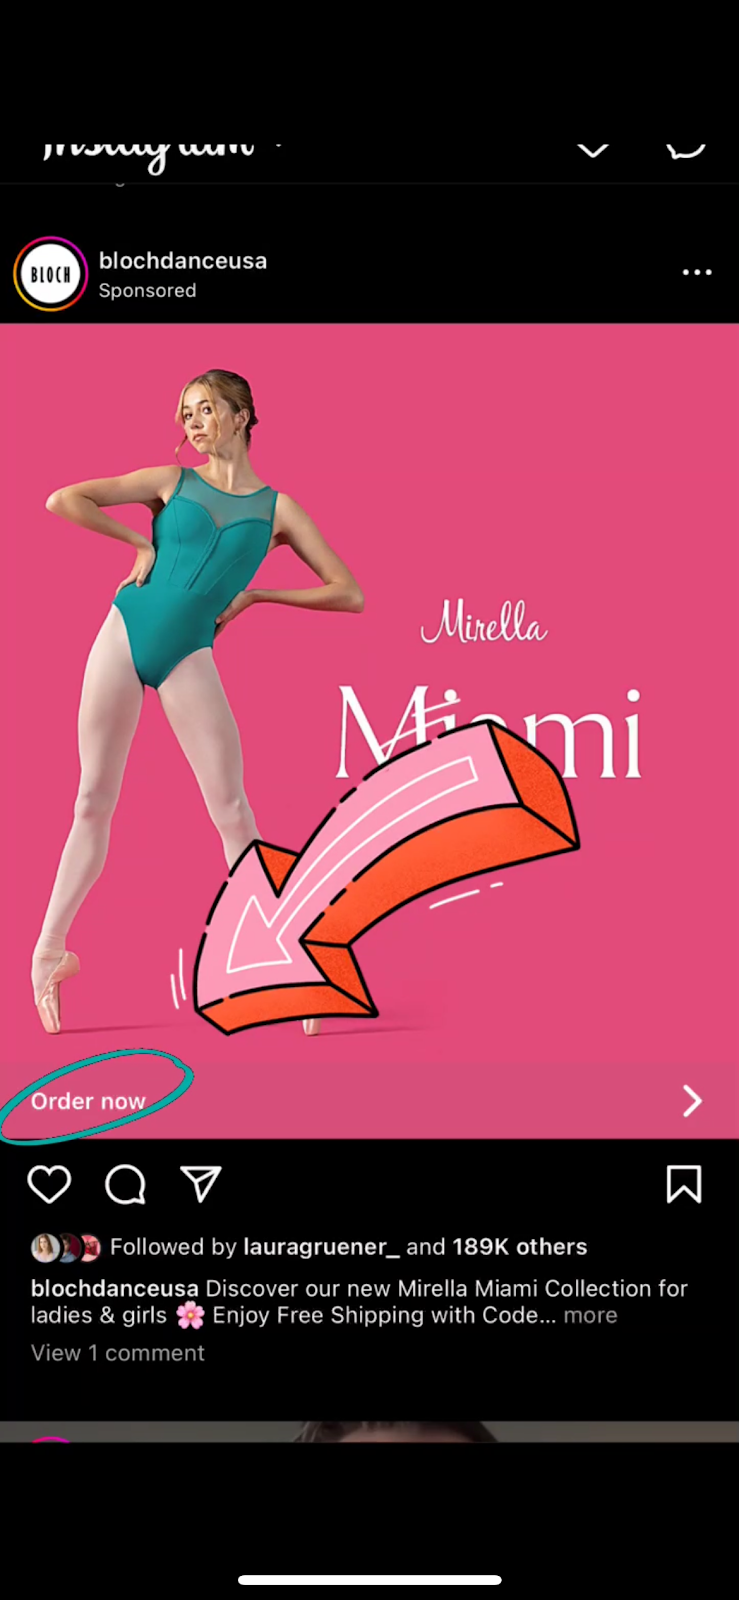 Screenshot of an Instagram ad from Bloch Dance USA featuring an "order now" CTA